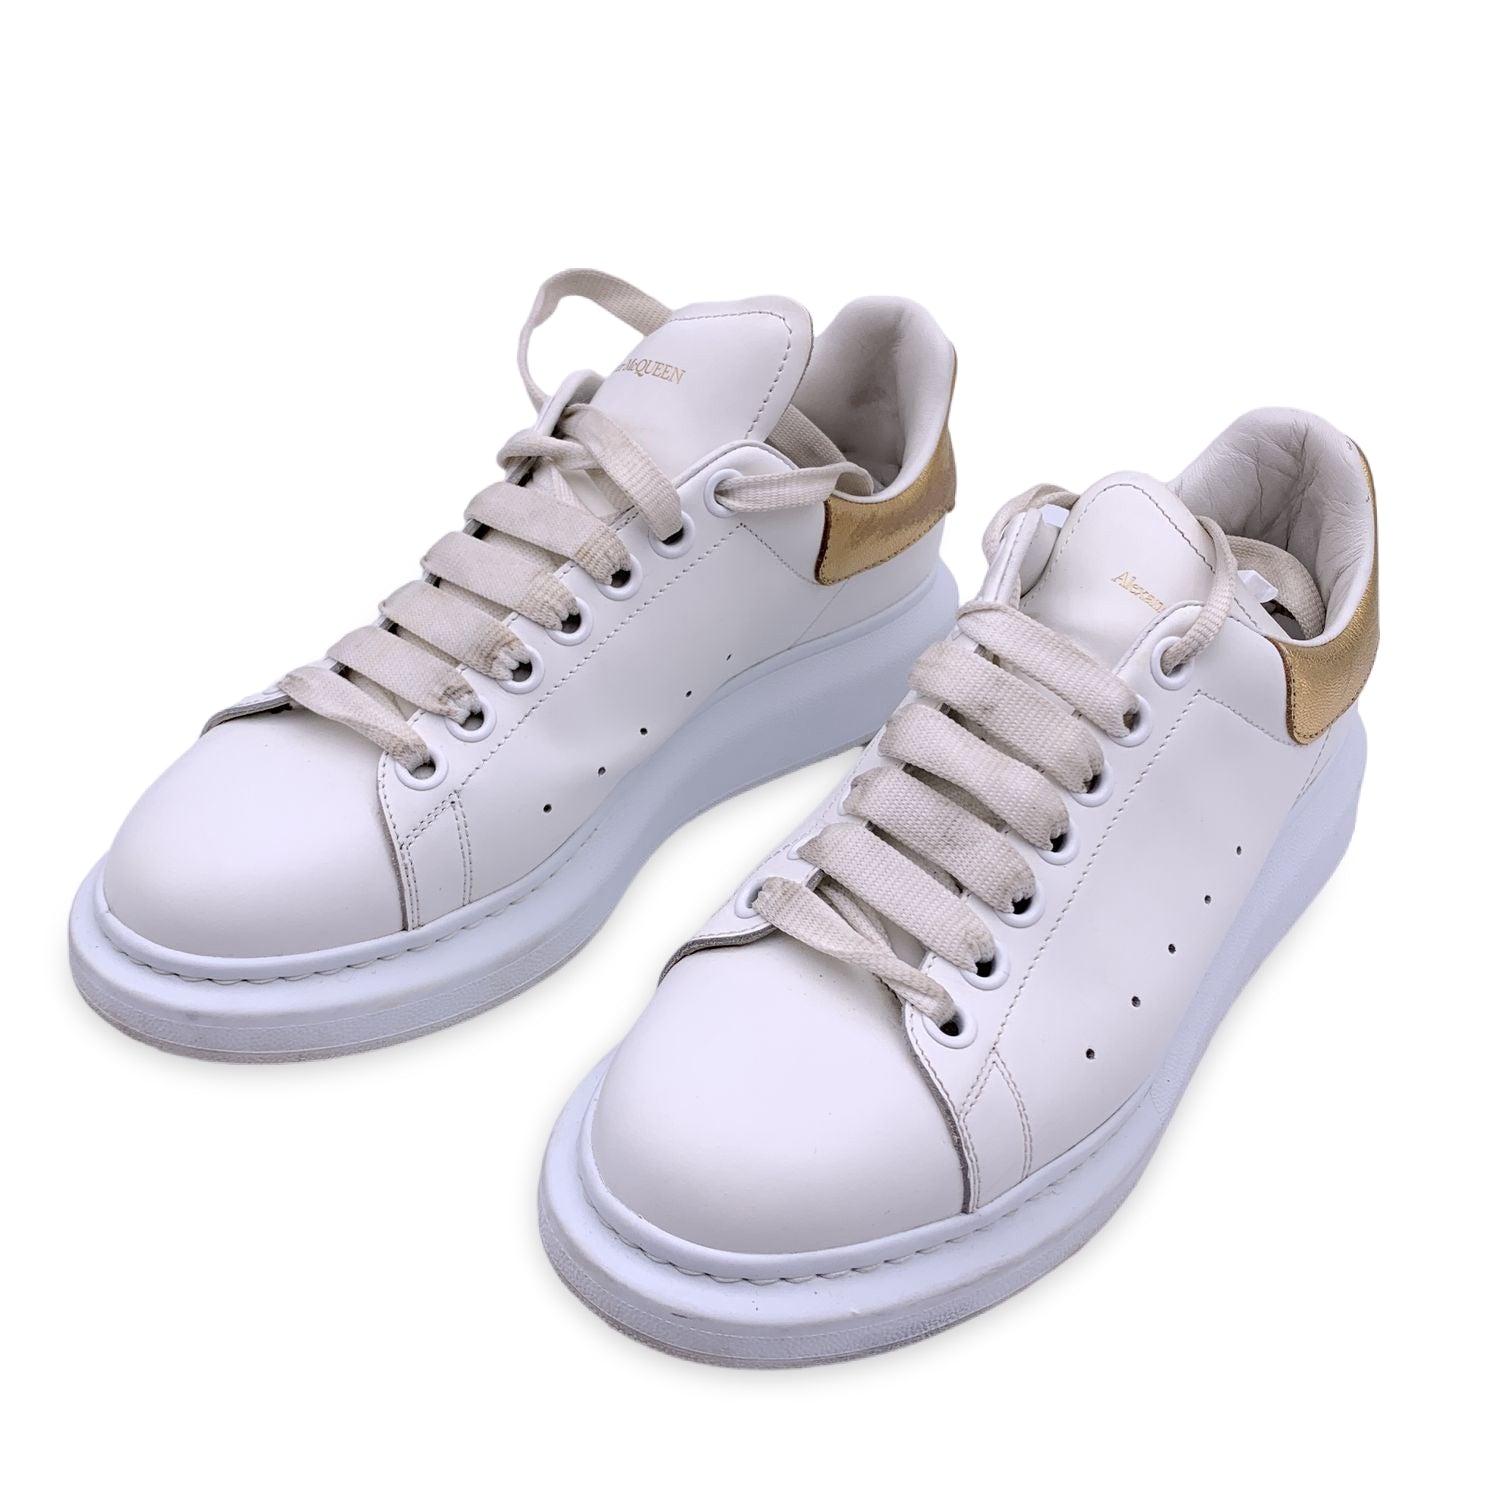 Alexander McQueen White and Gold Lace Up Sneakers Shoes Size 40 Excellent état à Rome, Rome